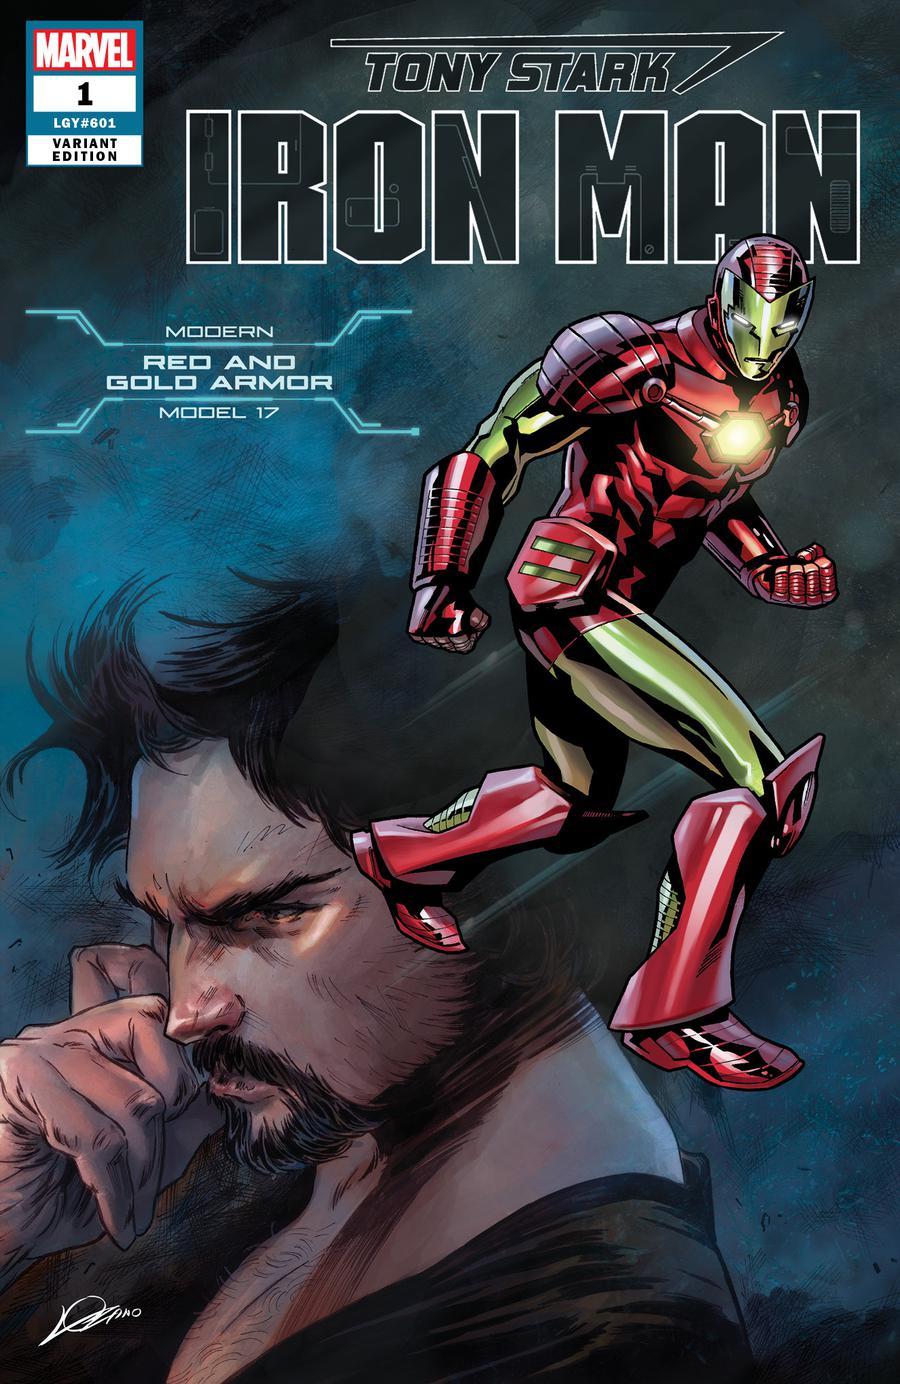 Tony Stark Iron Man #1 Cover I Variant Alexander Lozano & Valerio Schiti Model 17 Modern Red And Gold Armor Cover